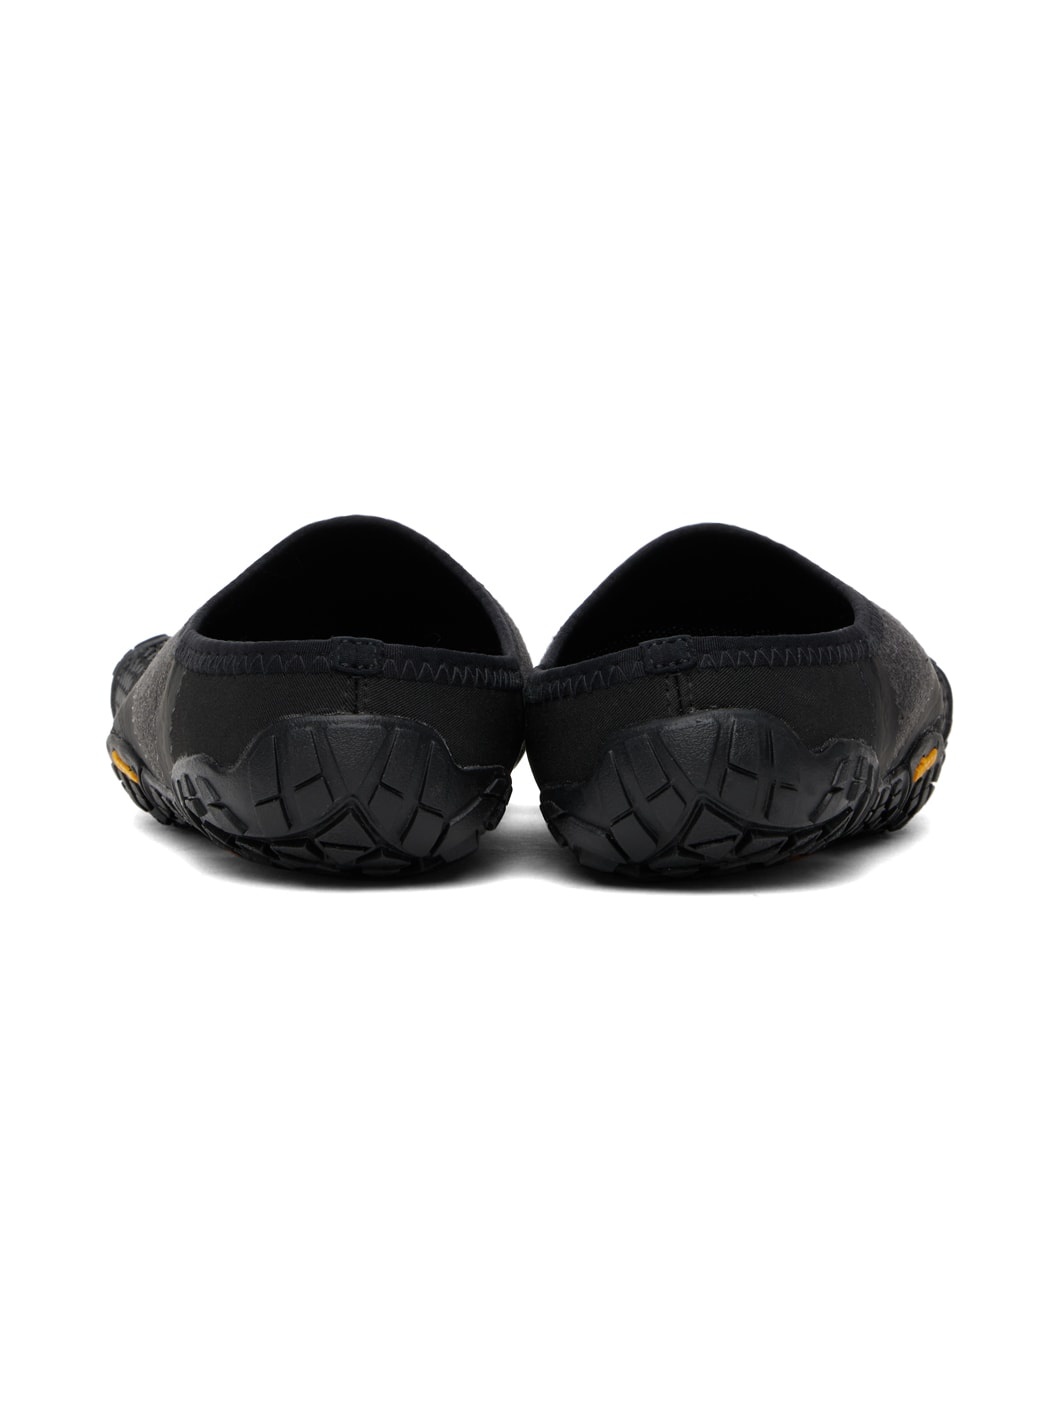 Black Vibram FiveFingers Edition NIN-SABO Sneakers - 2